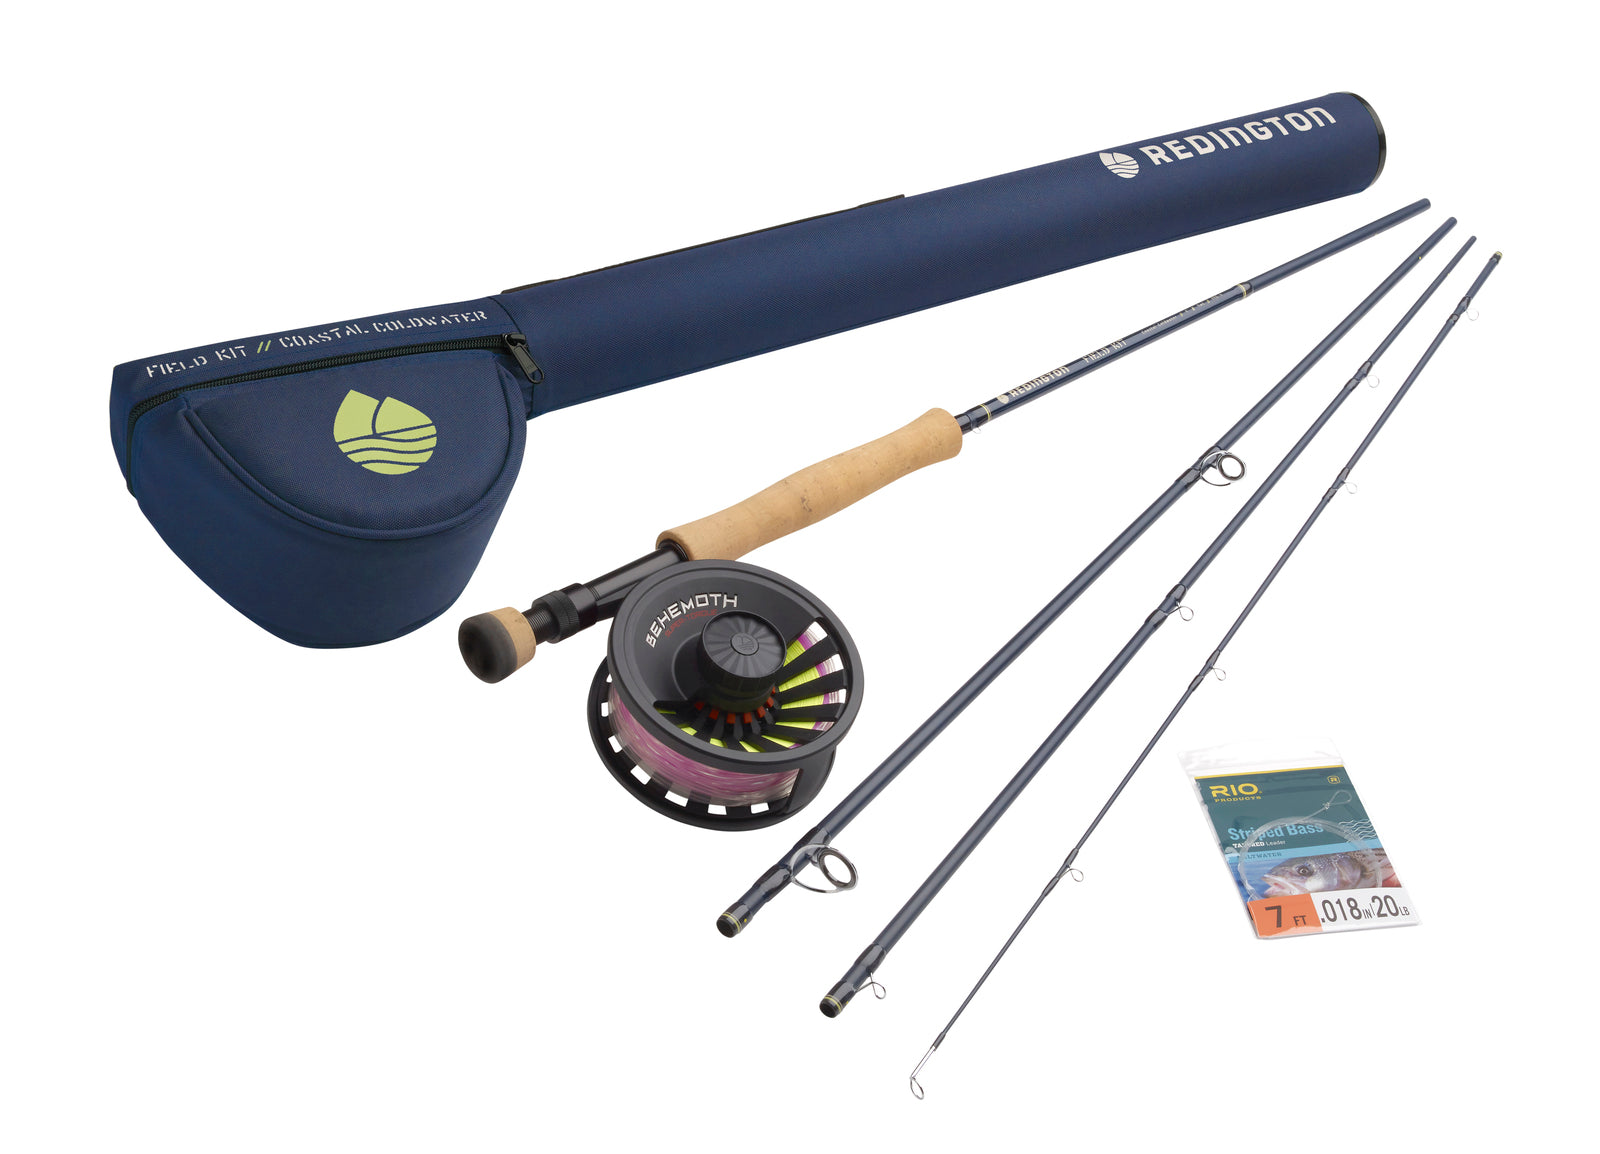 Redington Salmon Field Kit- 9' 8wt Premium fly rod and reel combo kit